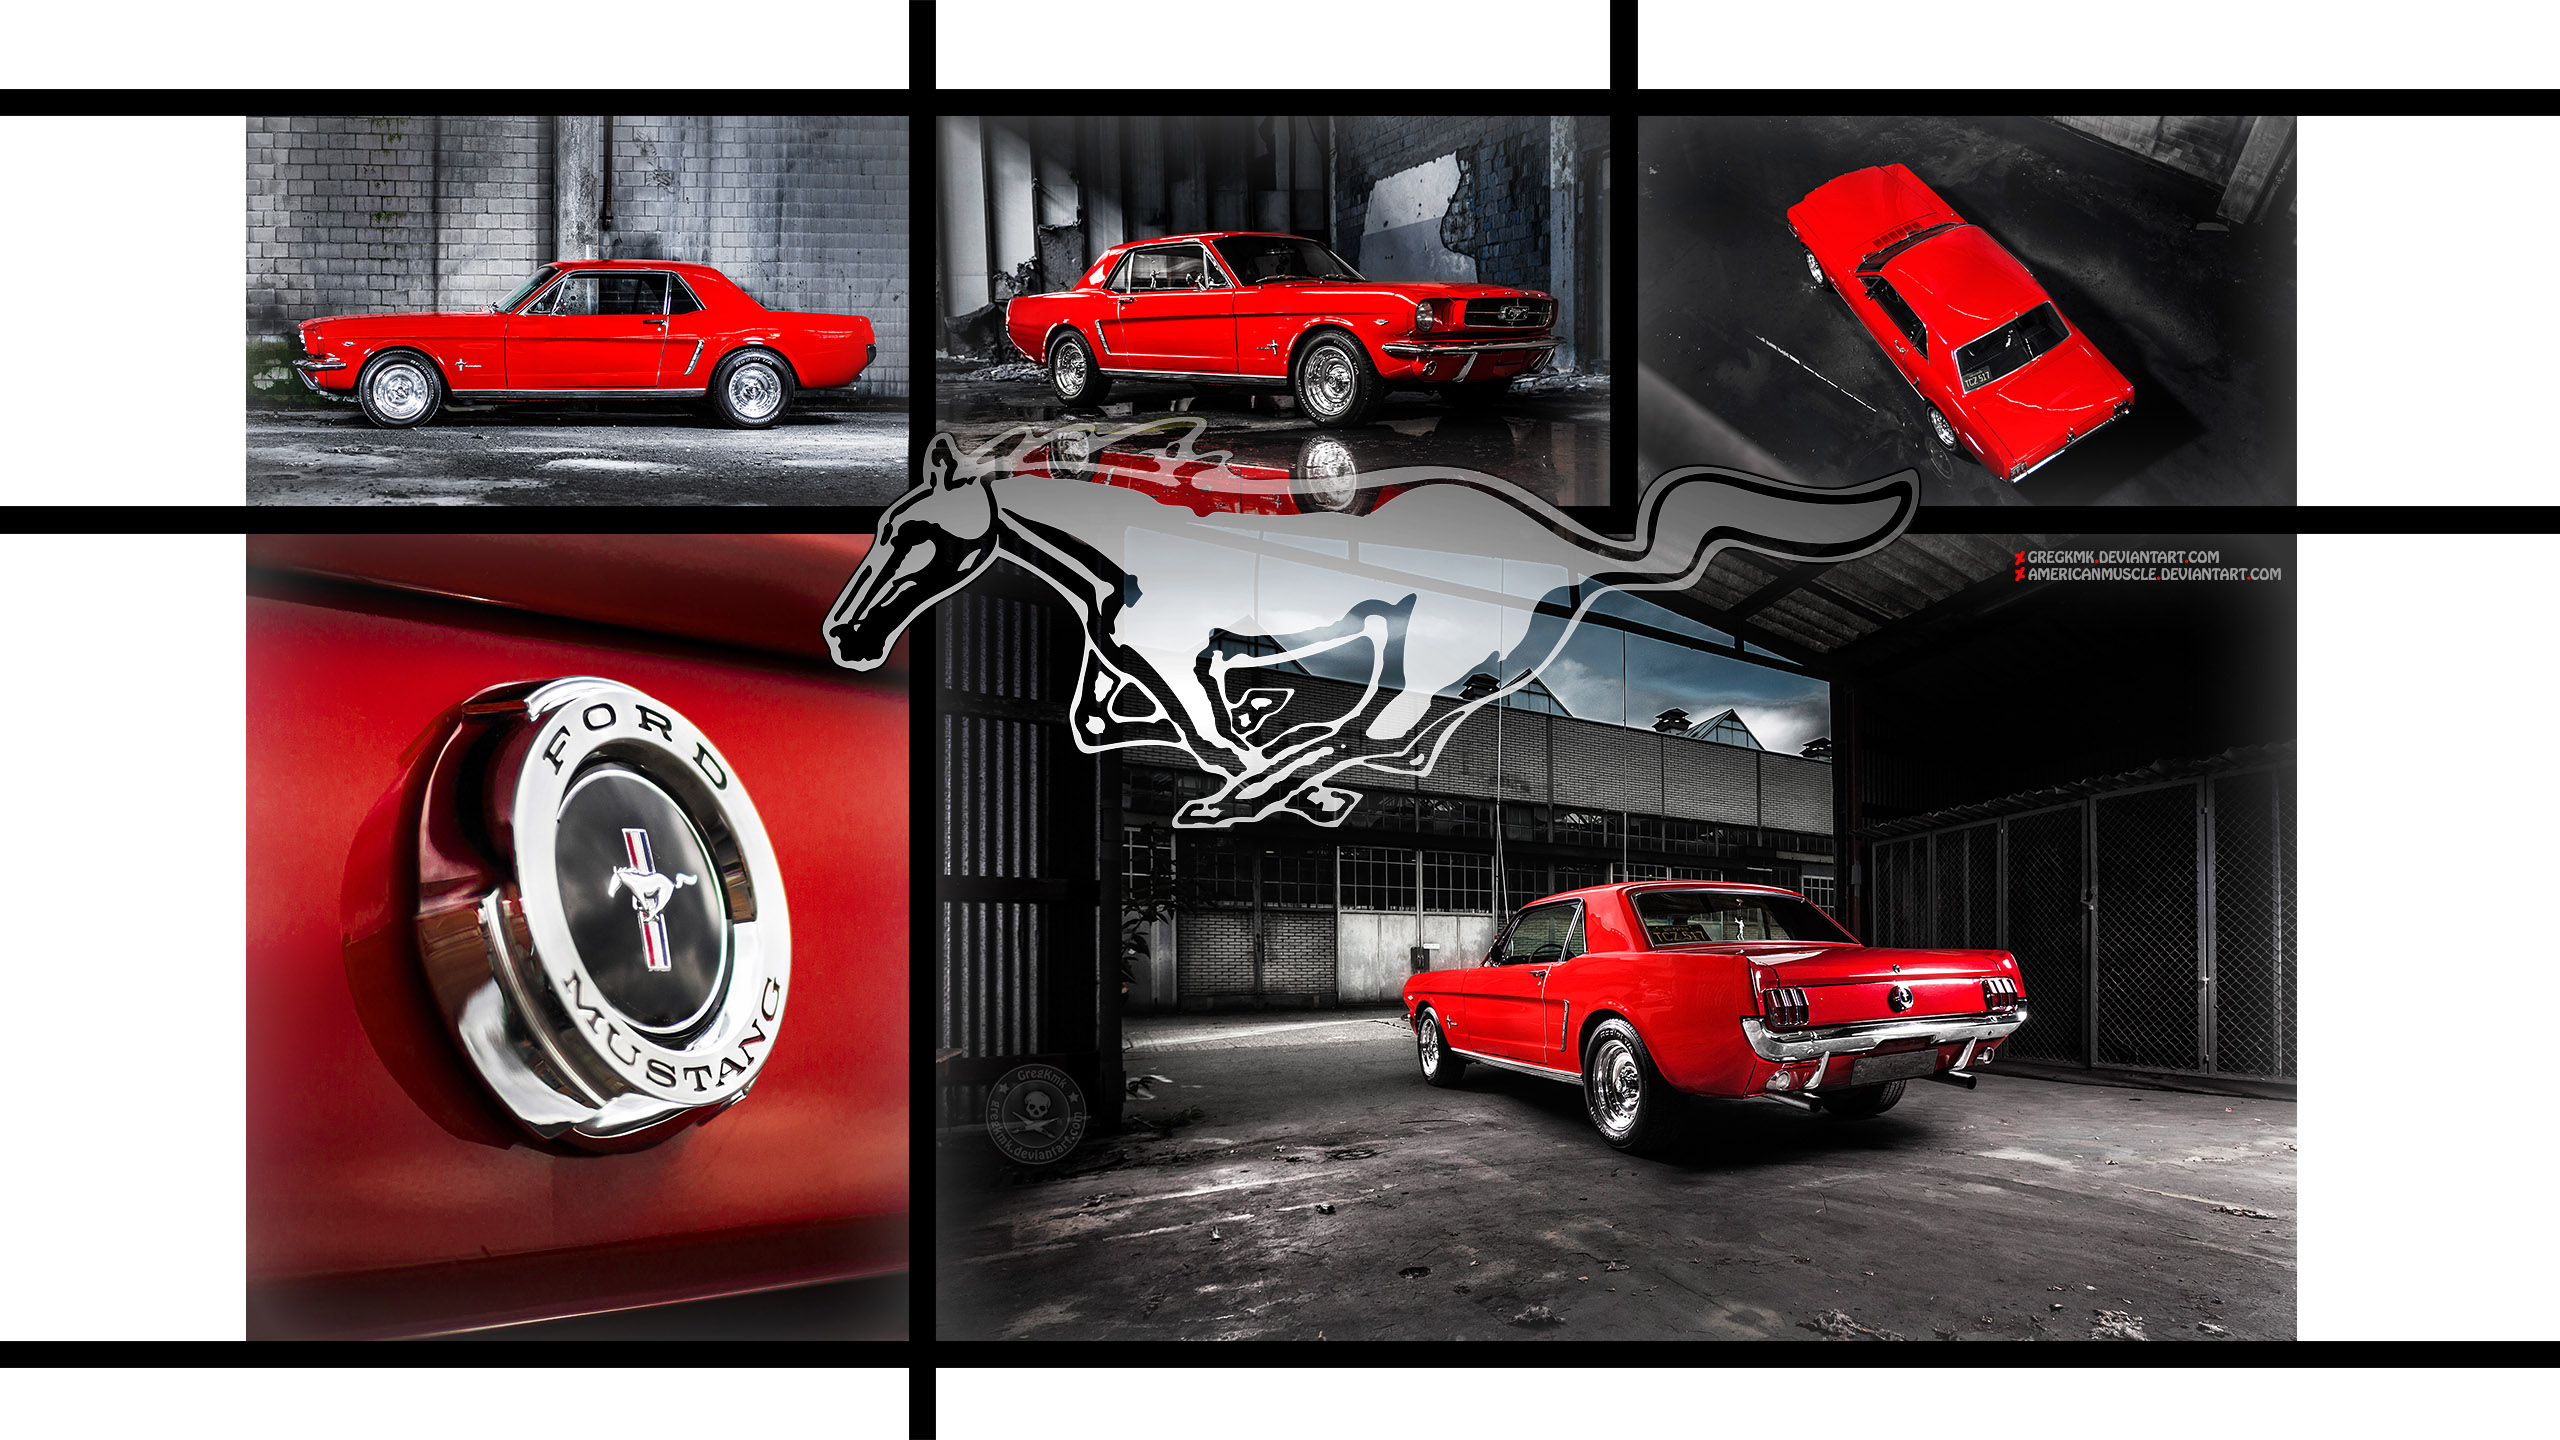 Red Mustang by Greg_Kmk